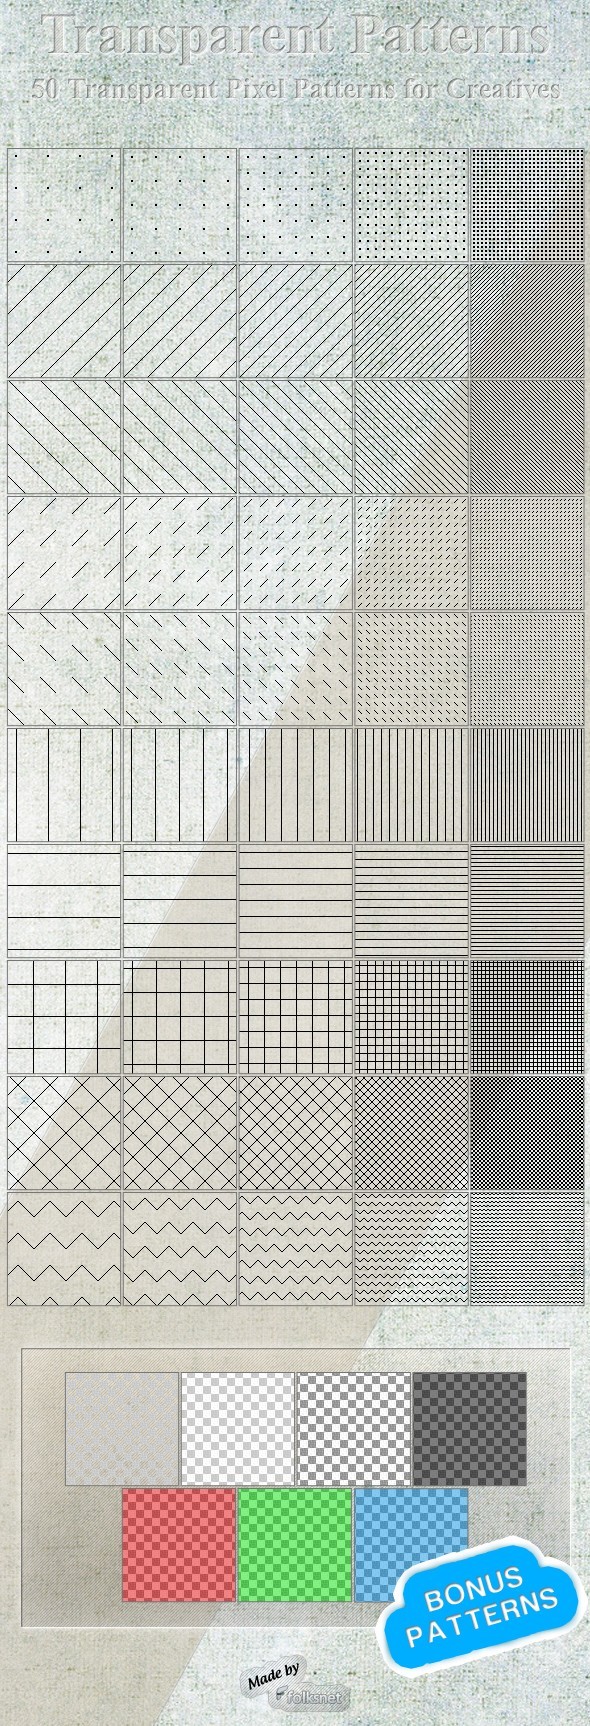 Transparent Patterns